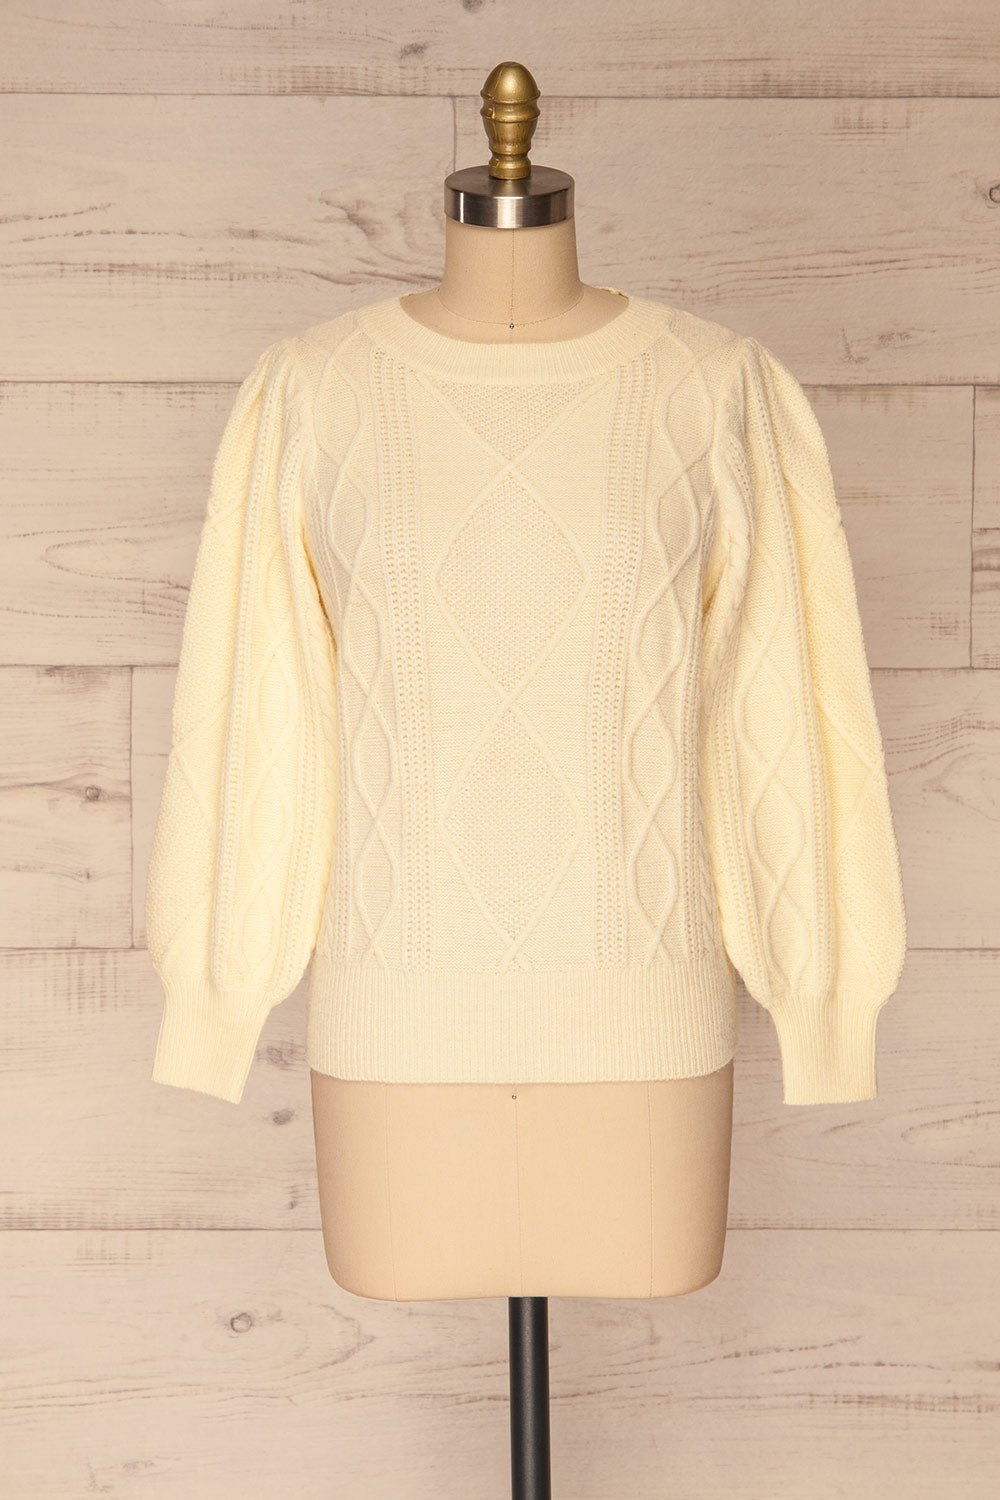 Barb Ivory Braided Knit Sweater | La petite garçonne front view 